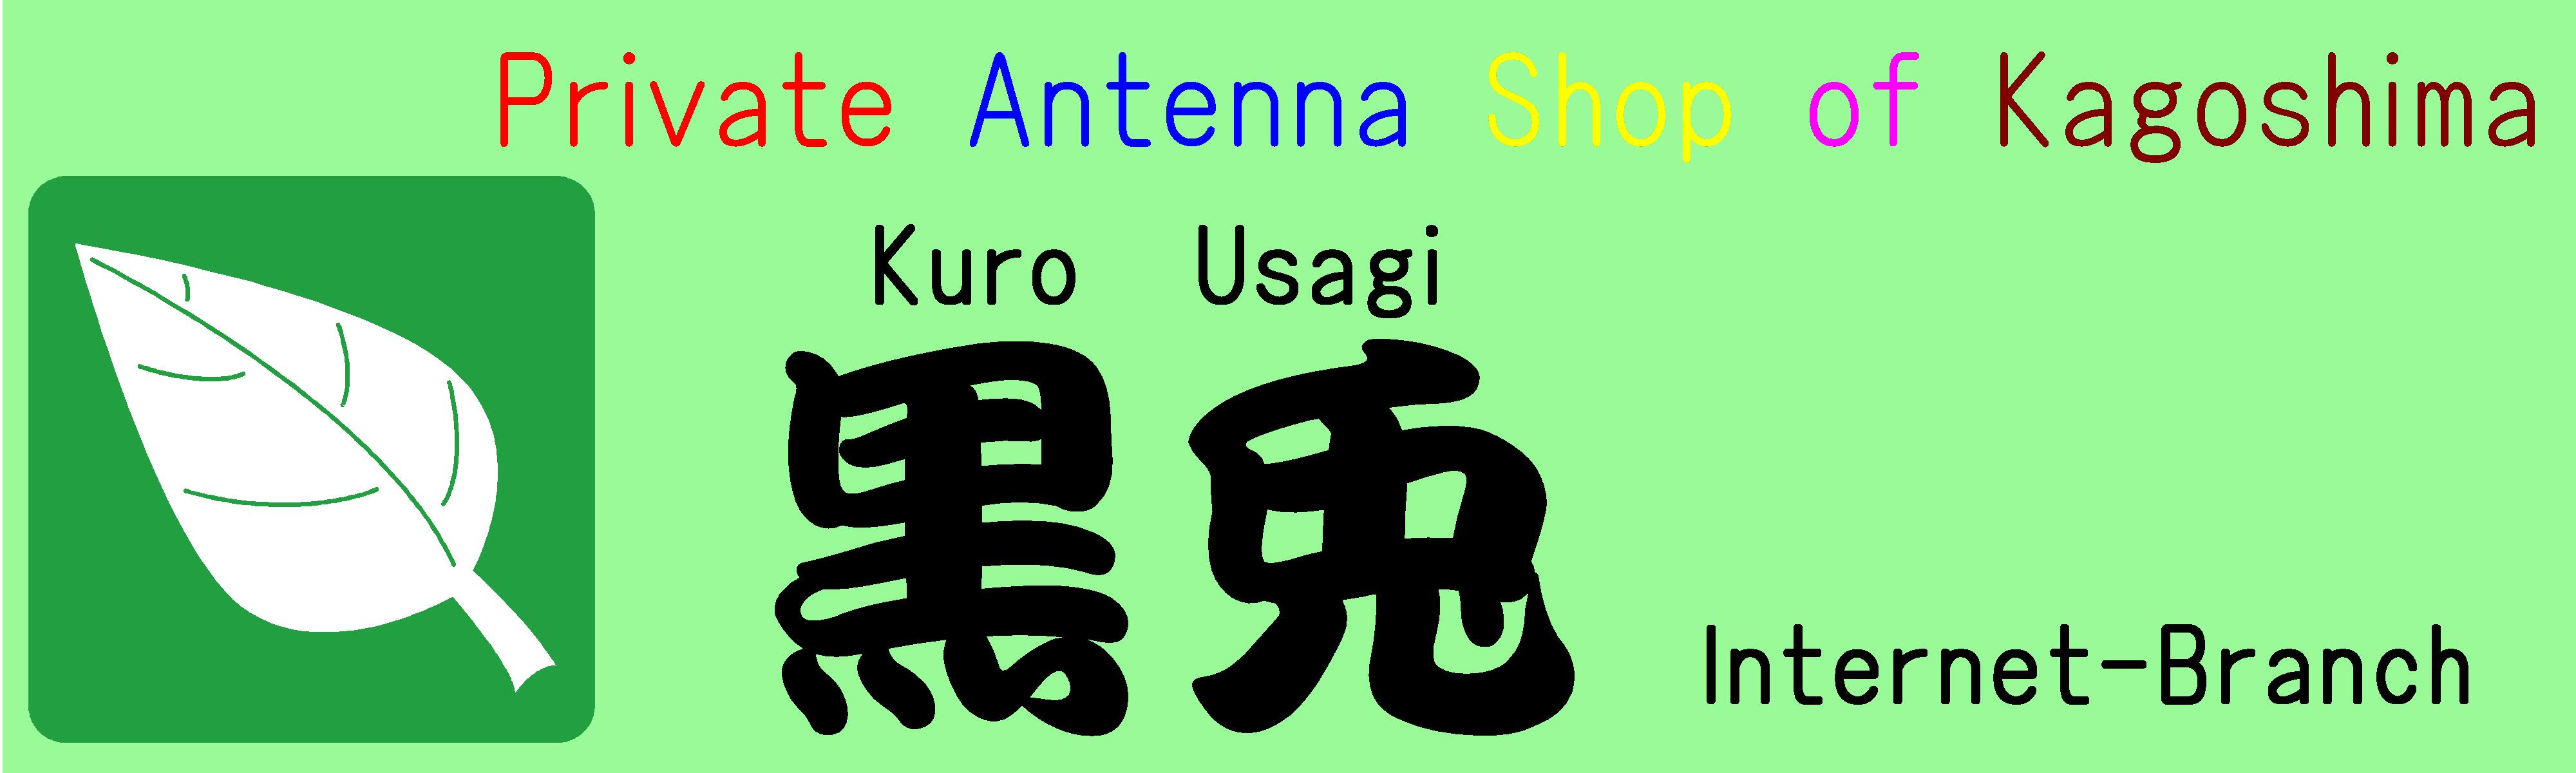 Private Antenna Shop of Kagoshima : Kagoshima-tea, Meal and Snack : Kuro-Usagi